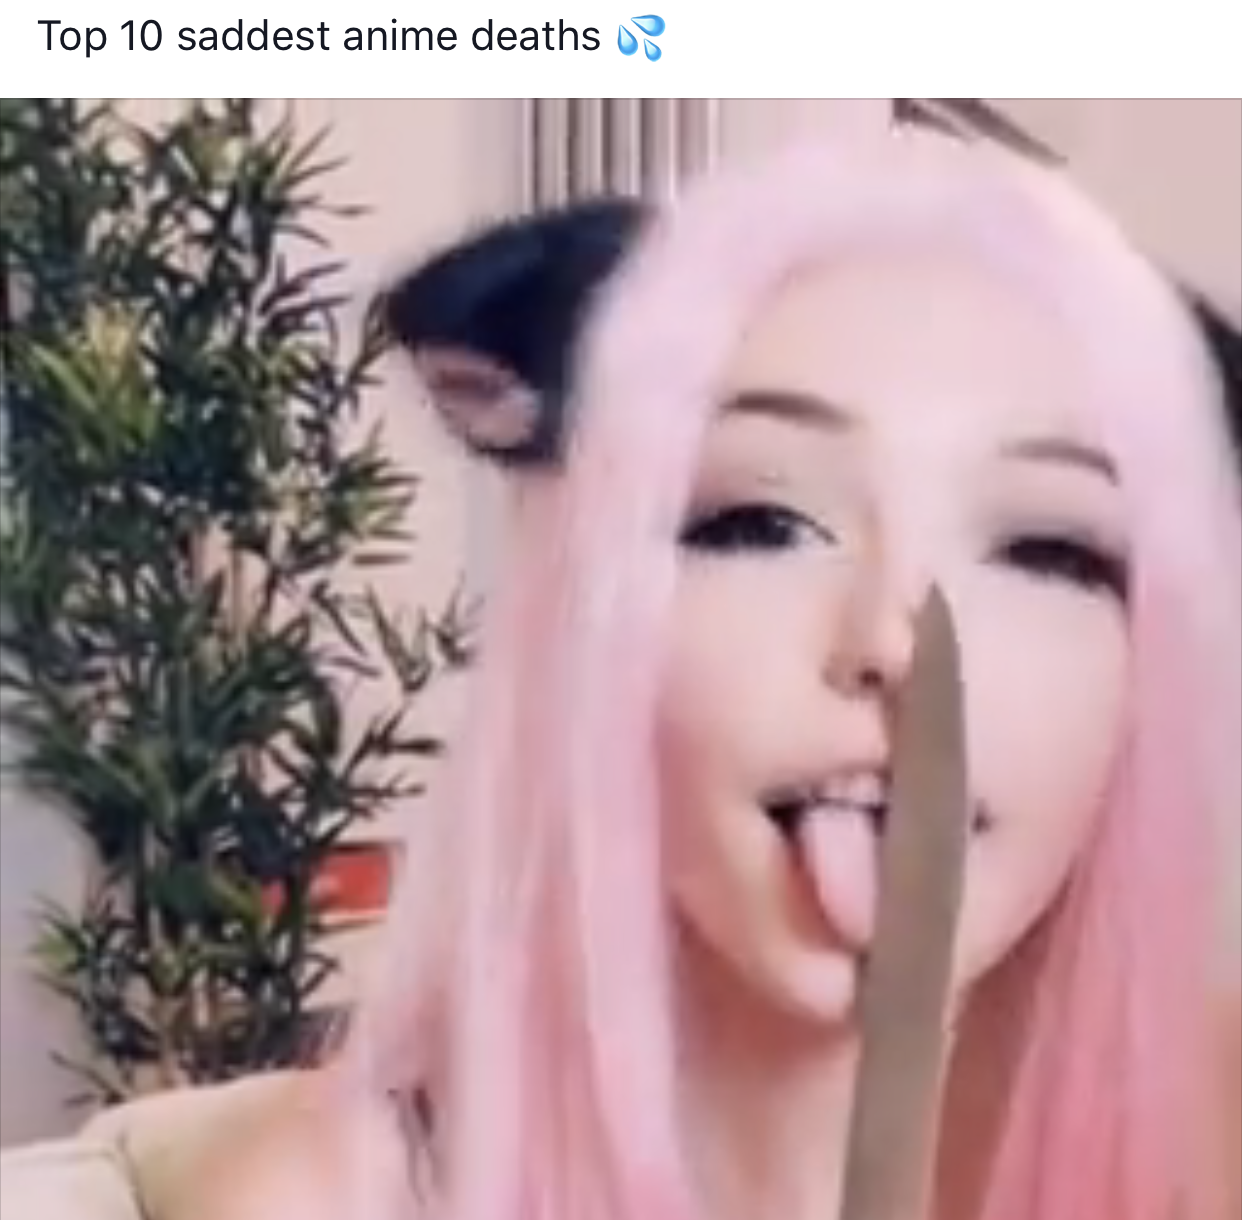 cute belle delphine - Top 10 saddest anime deaths